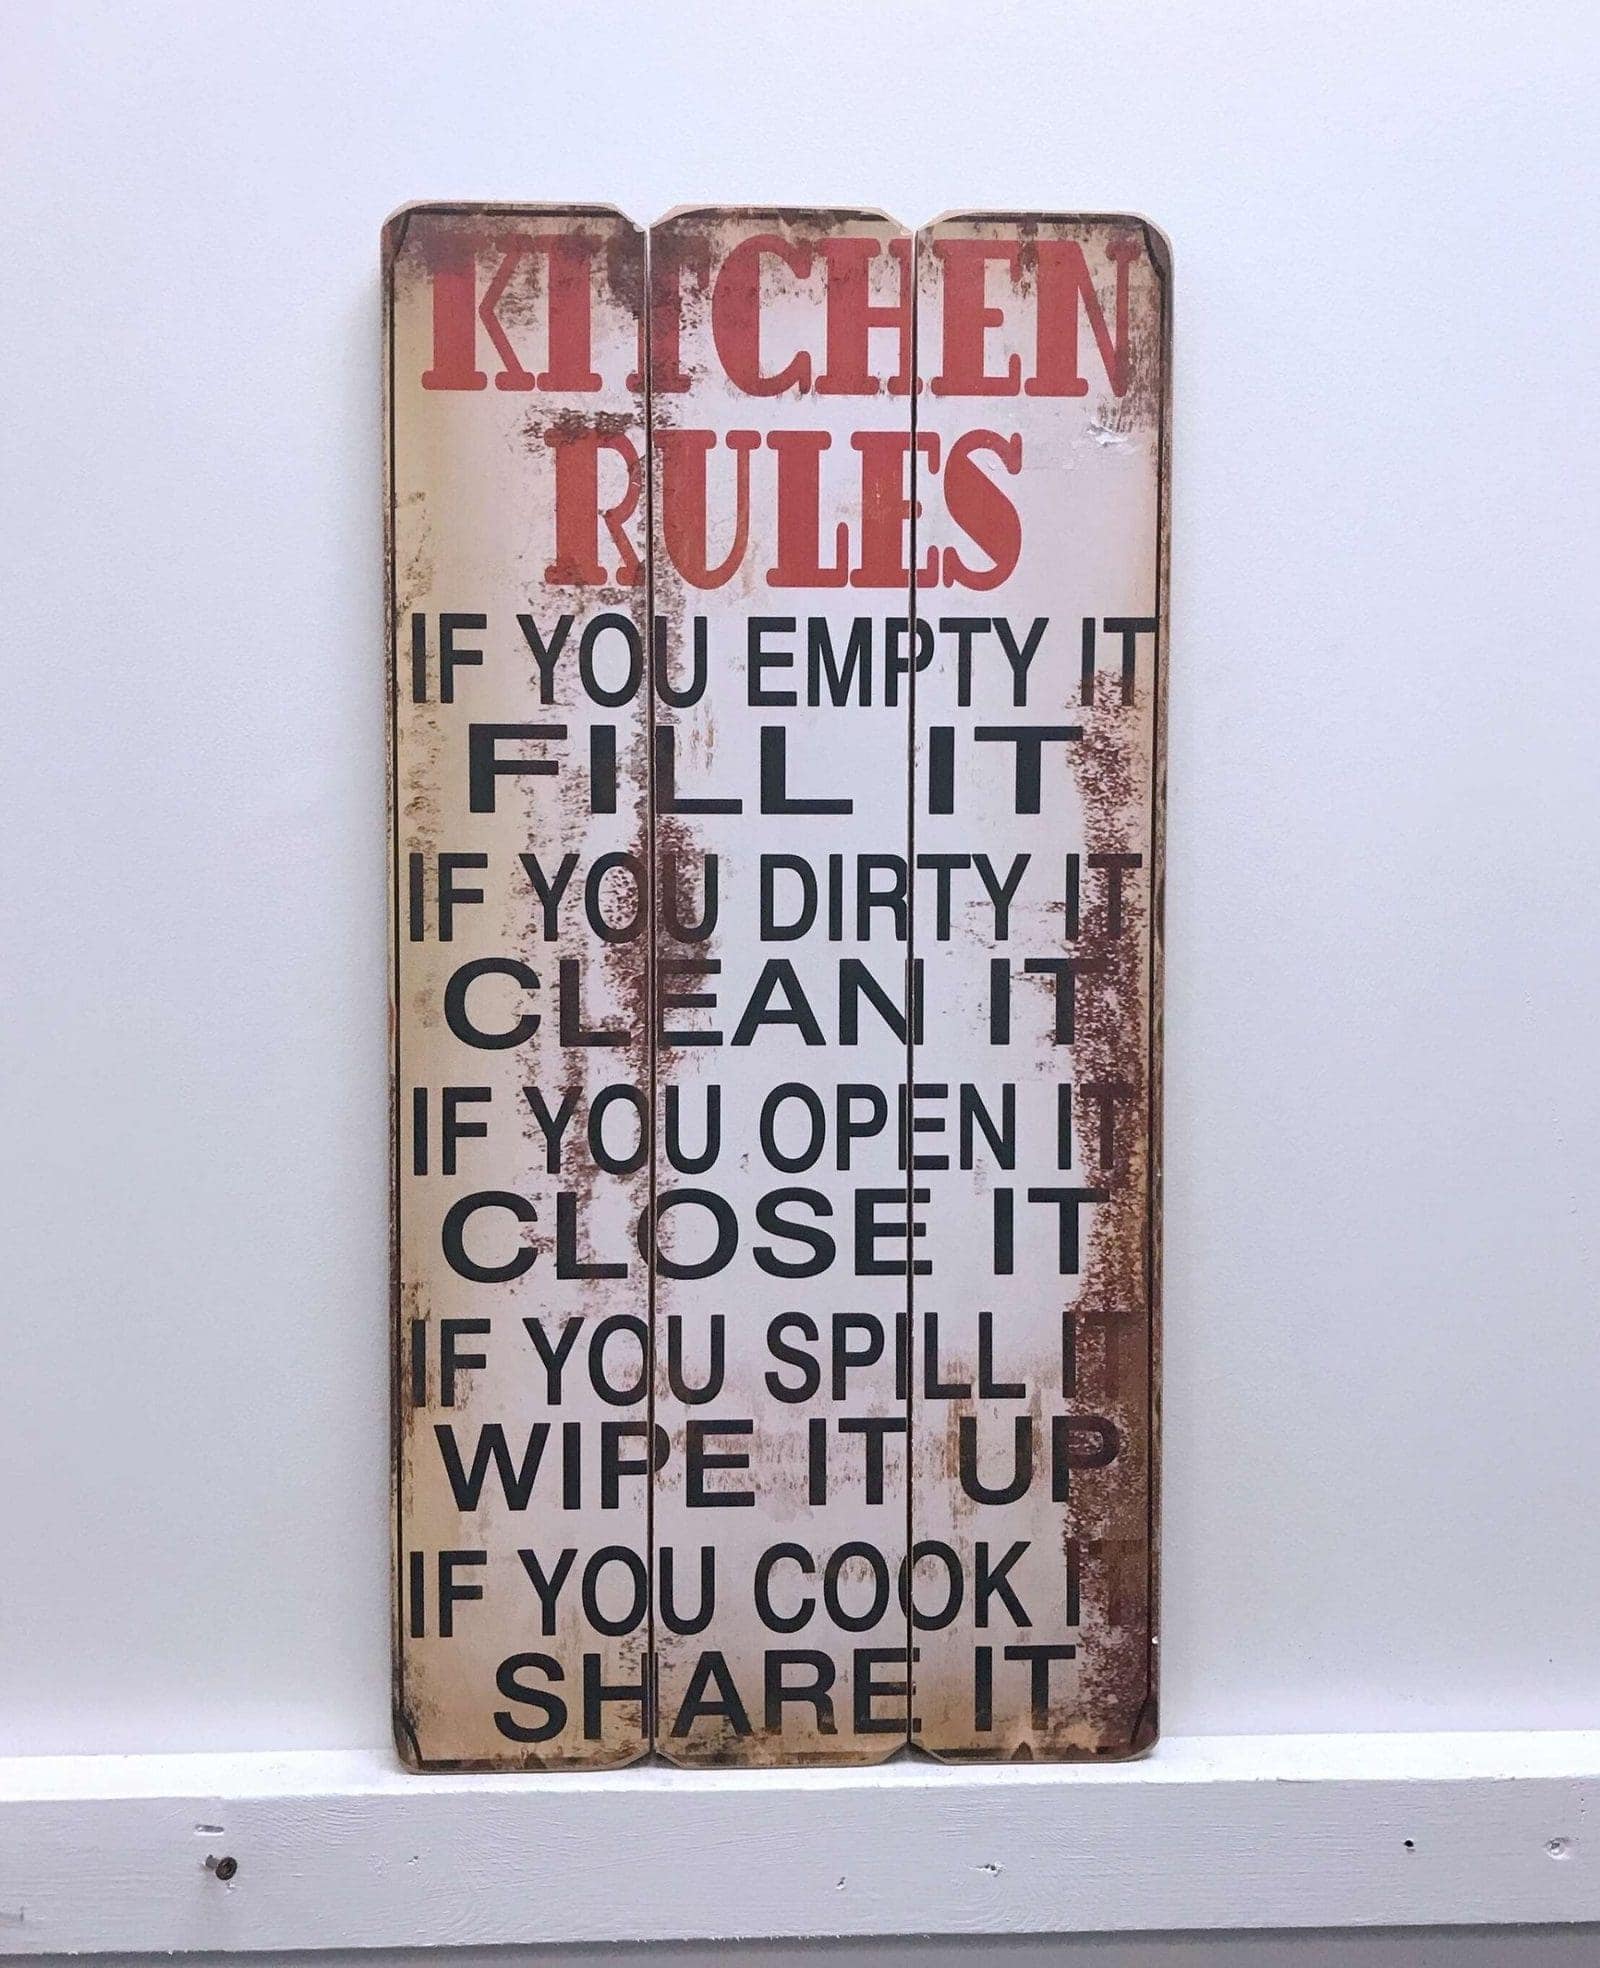 Kitchen Rules